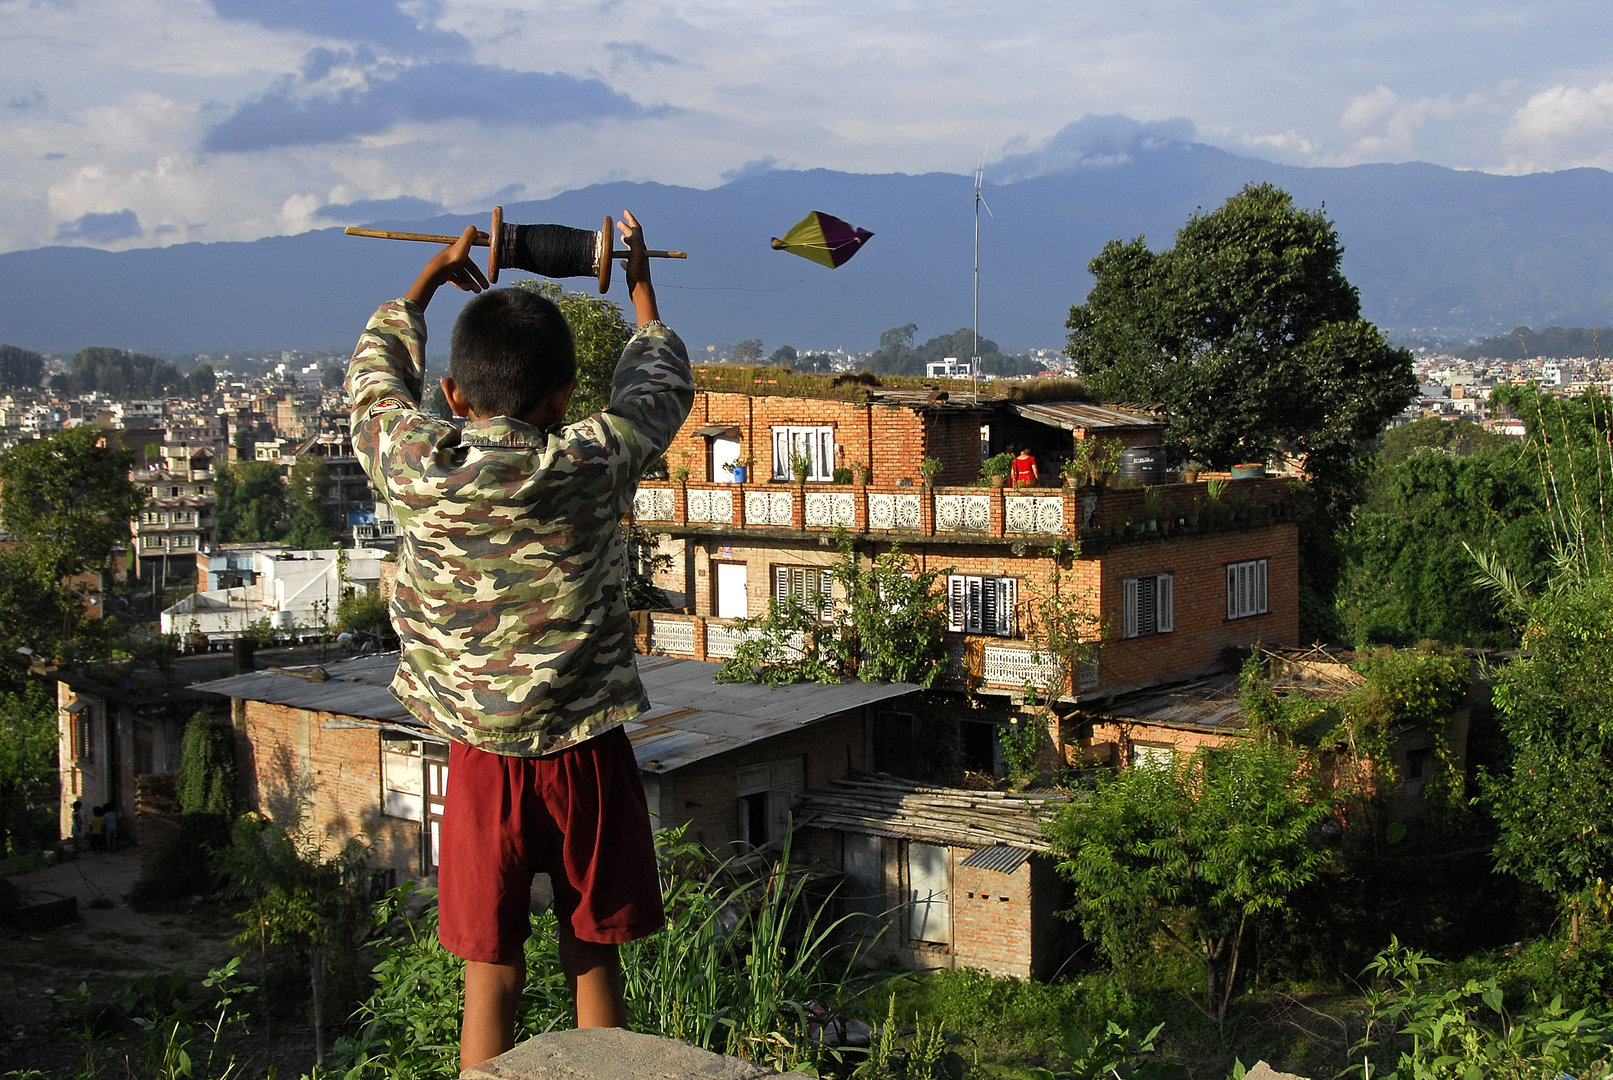 Flying kite in Kathmandu Valley